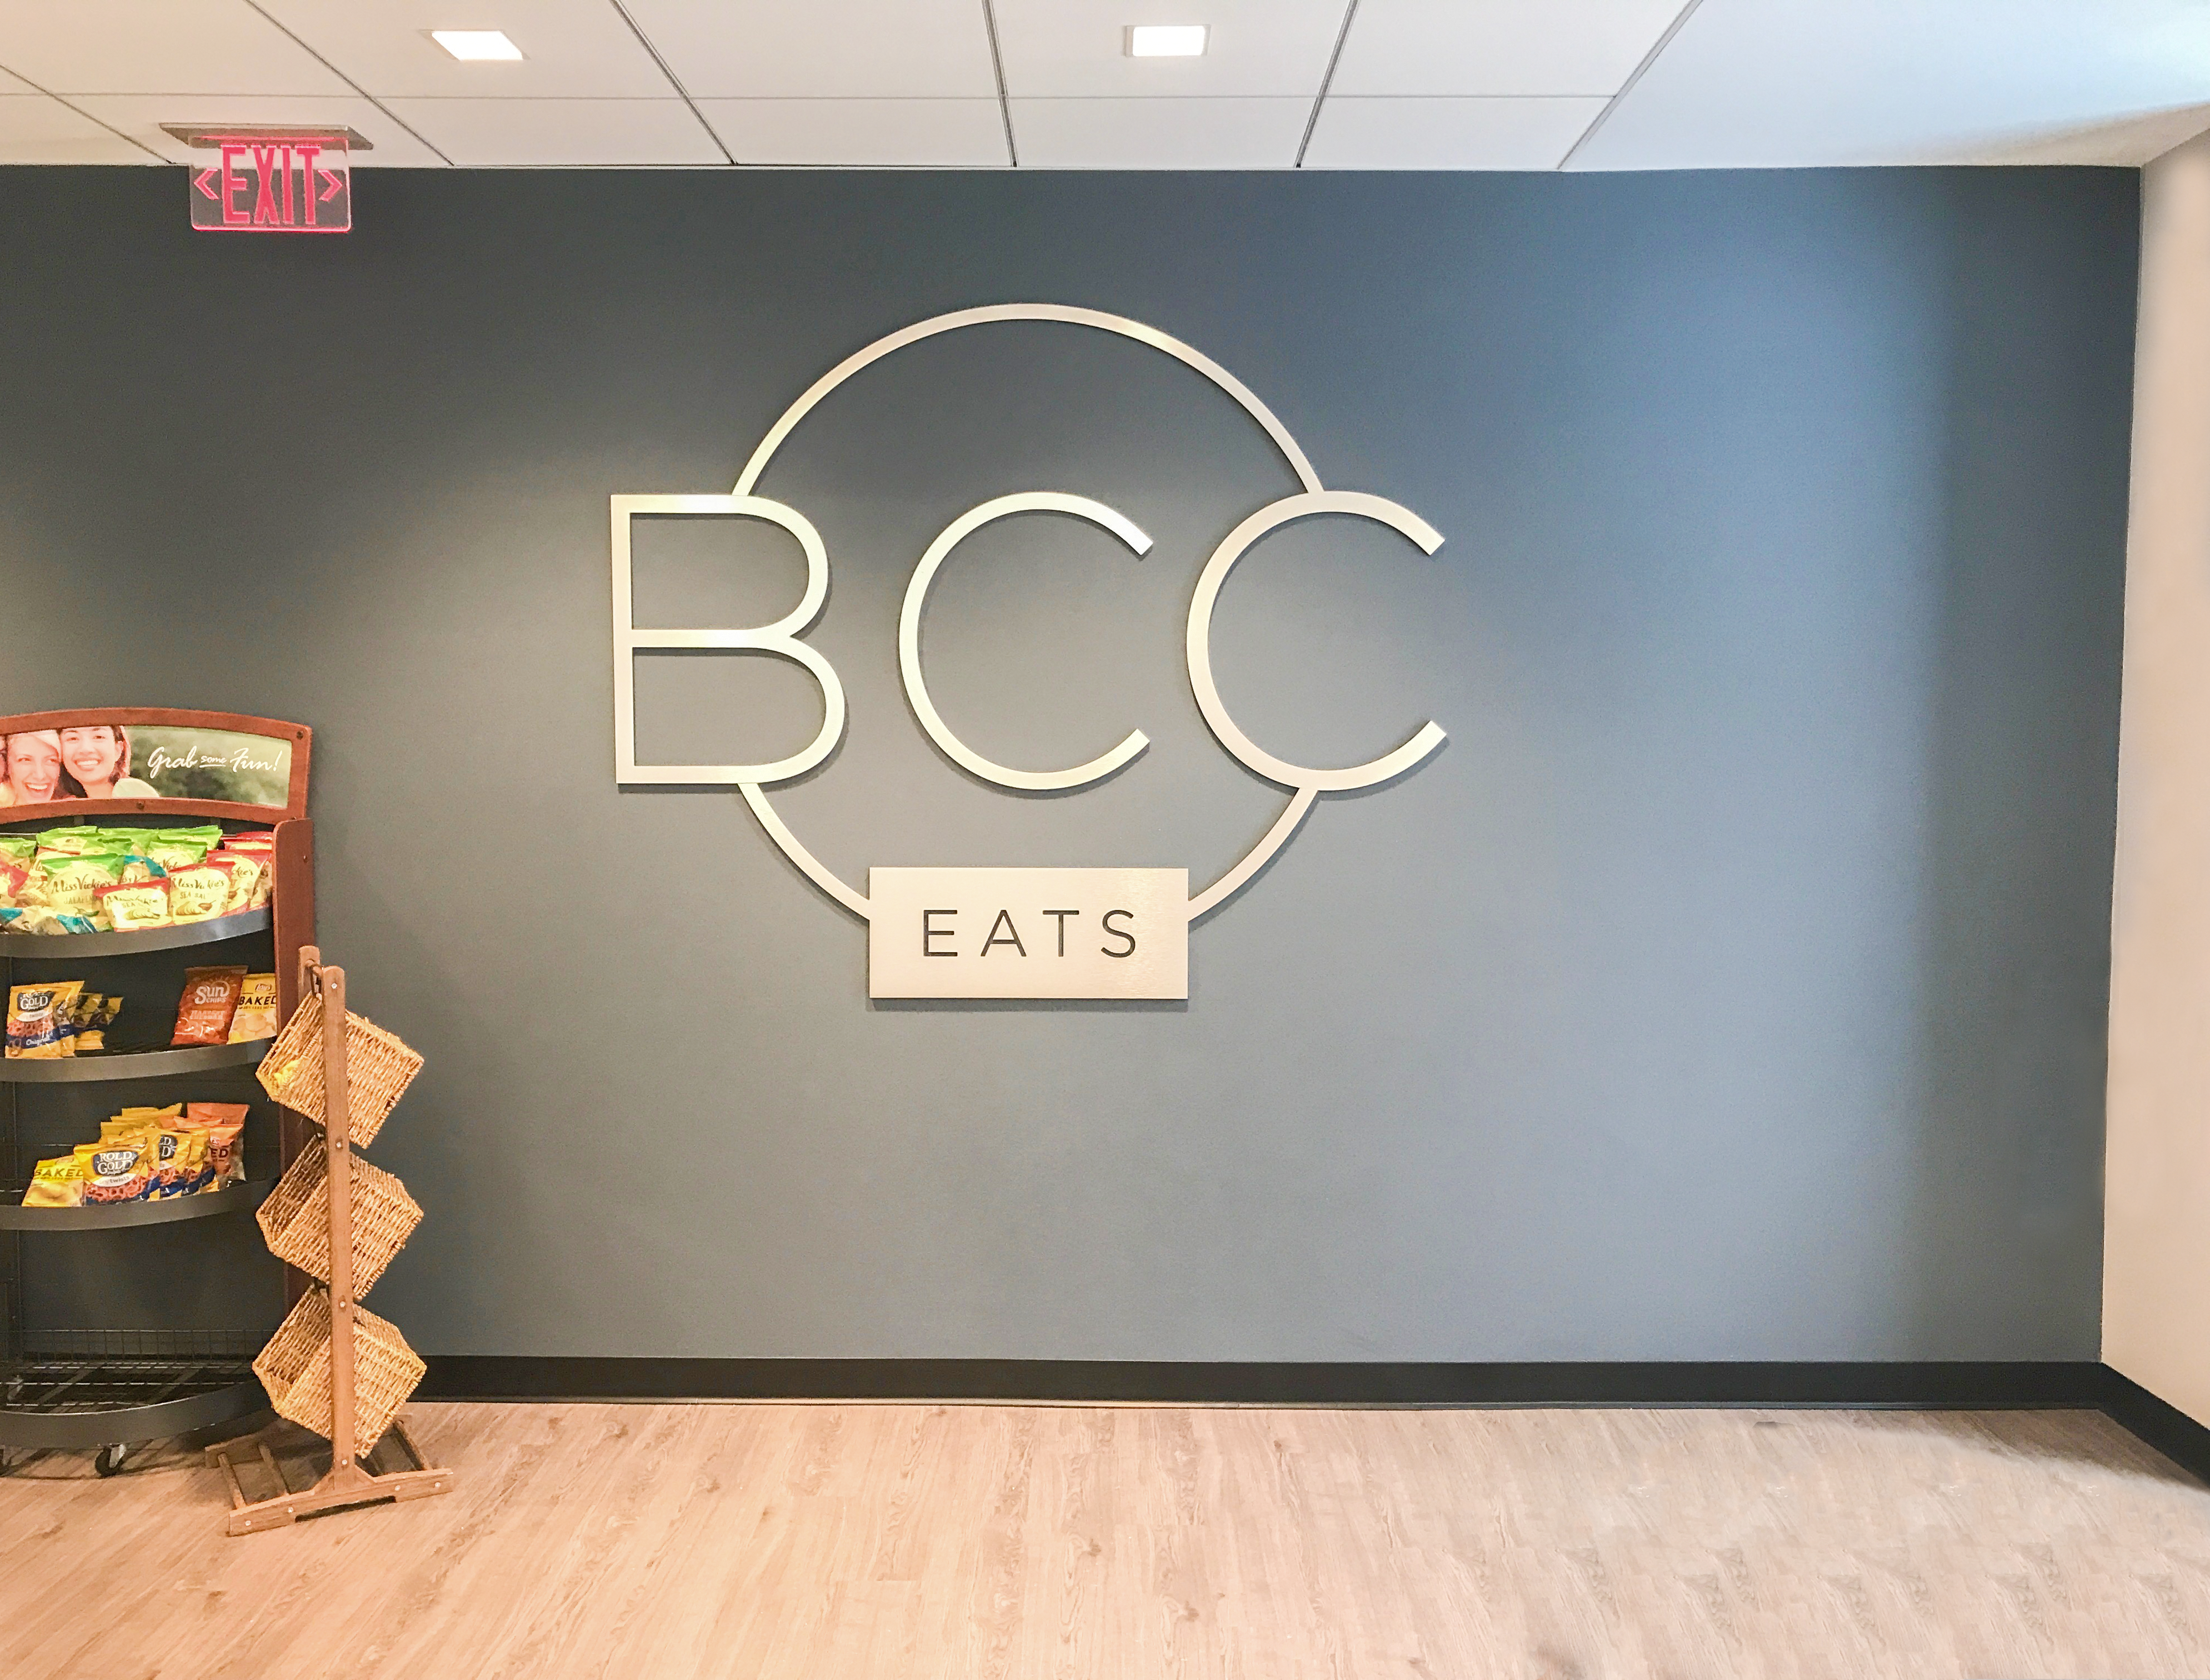 BCC Eats indoor wall sign